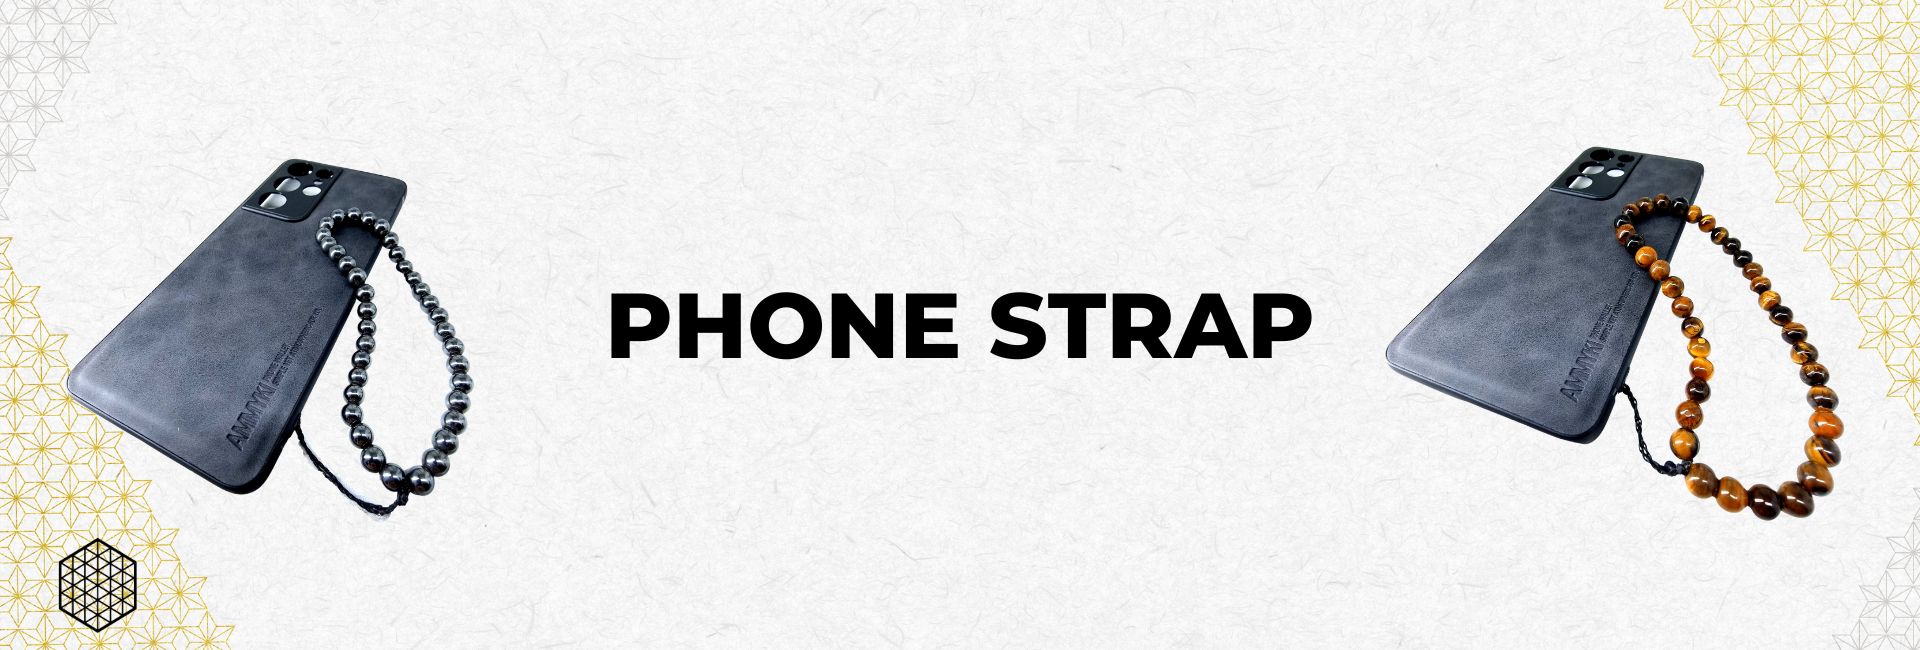 phone strap CATEGORIA